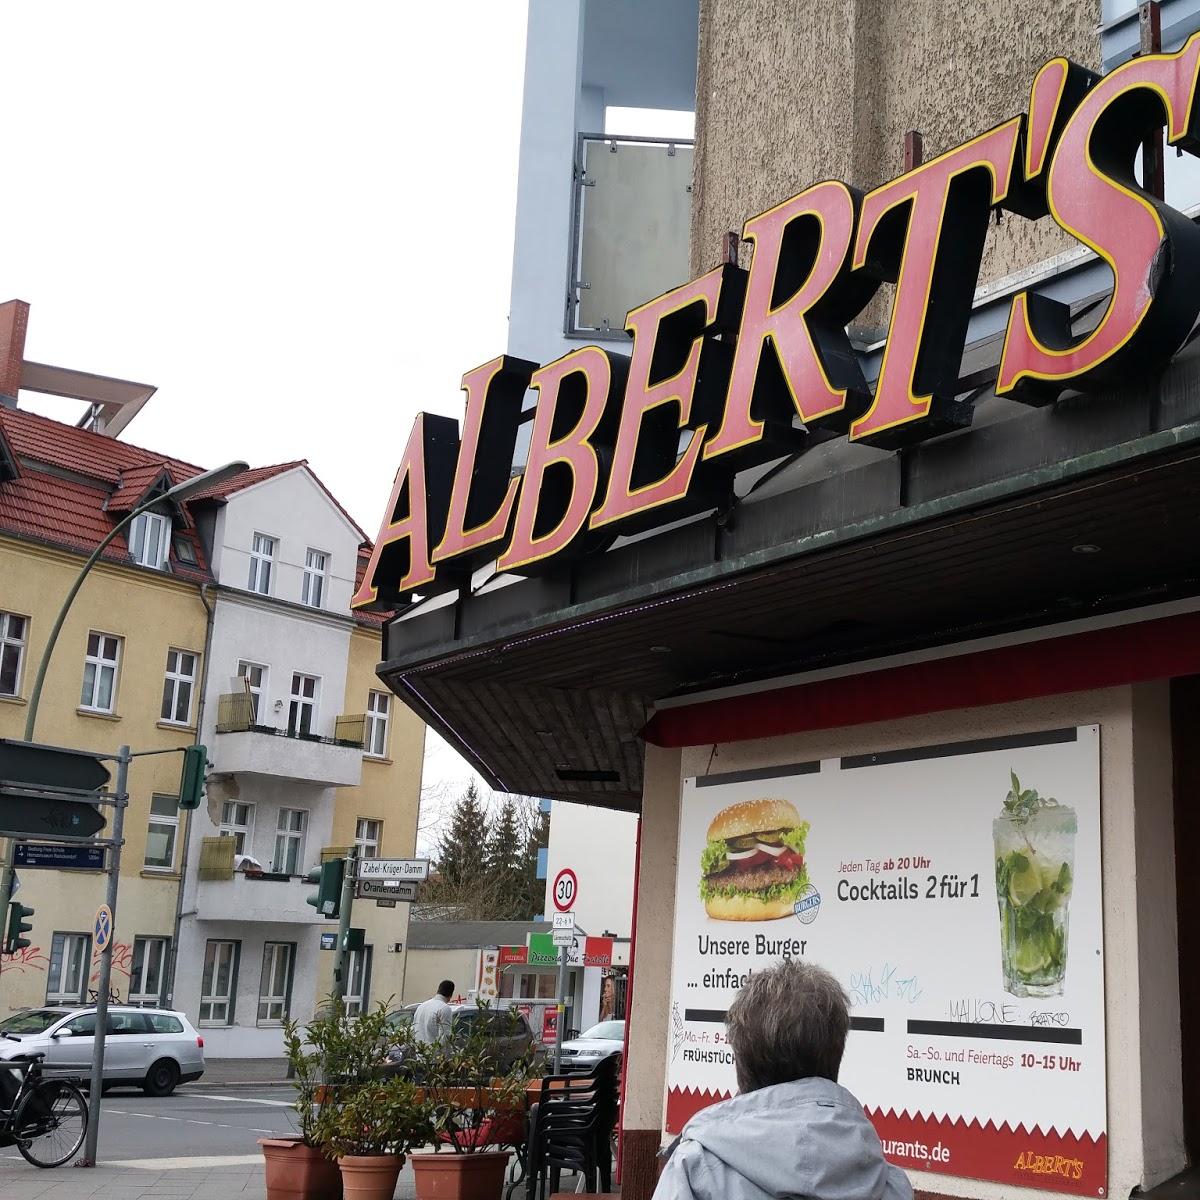 Restaurant "Albert